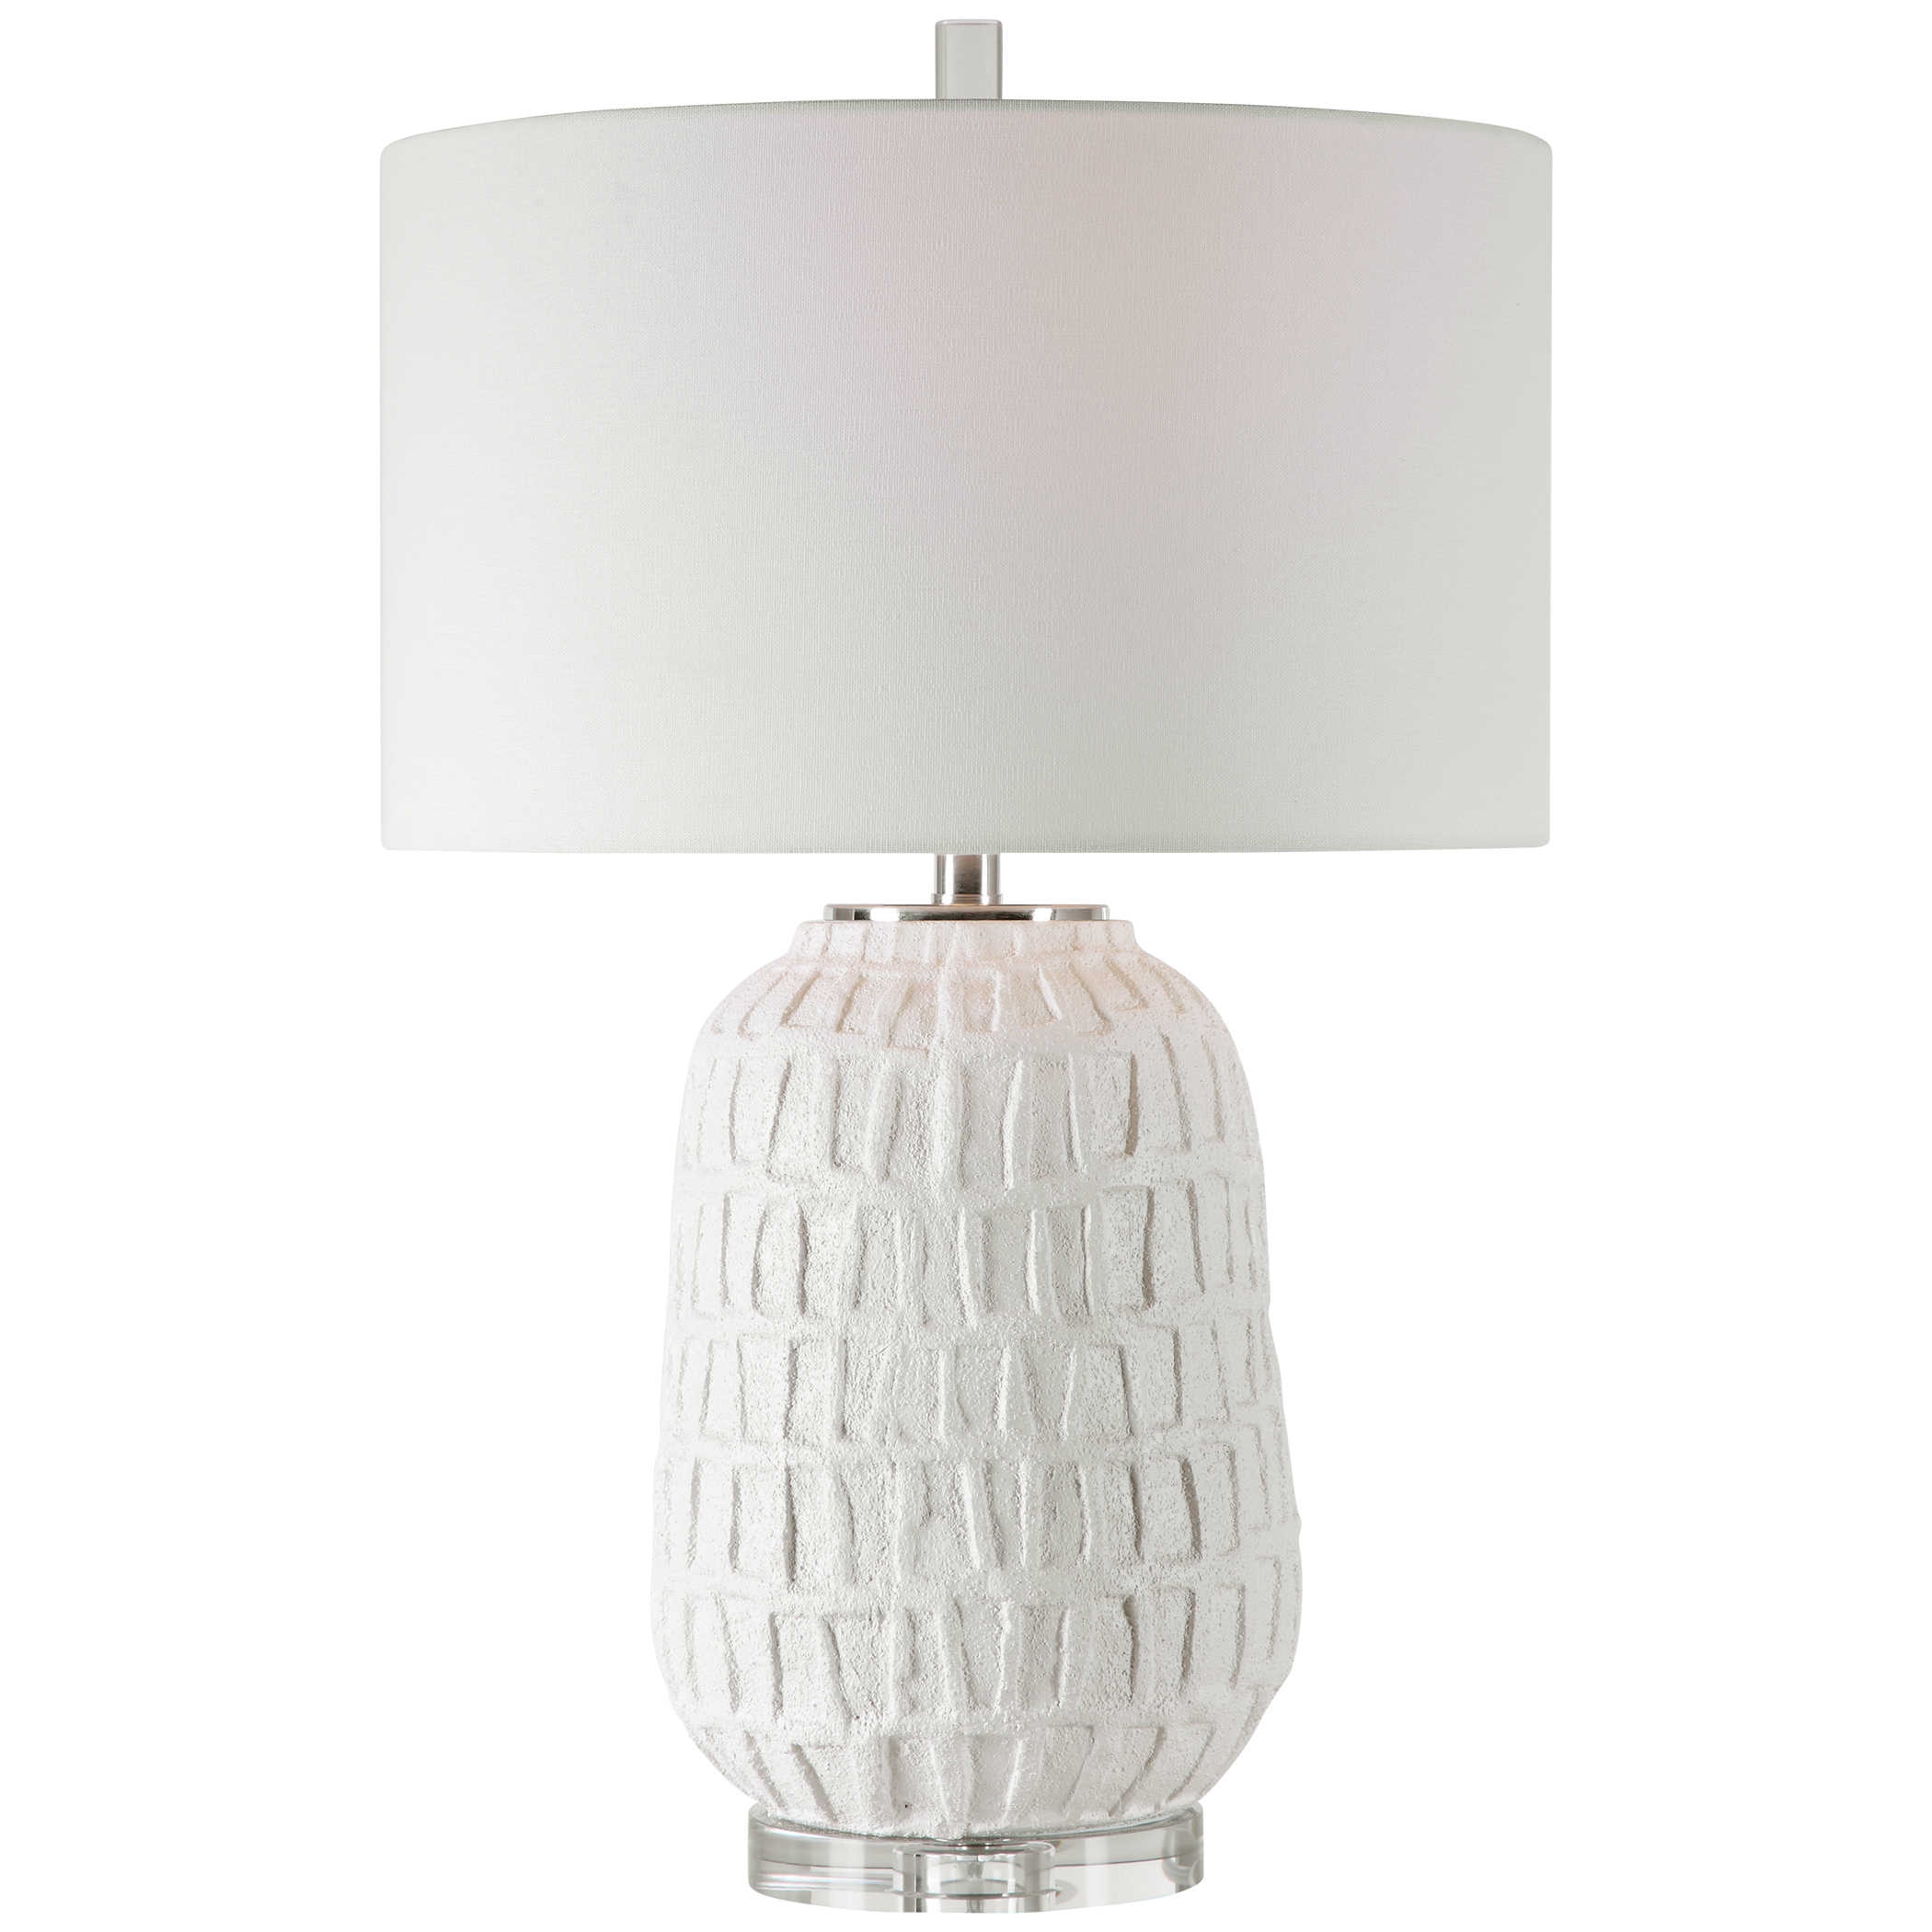 Caelina Textured Table Lamp, White - Image 0